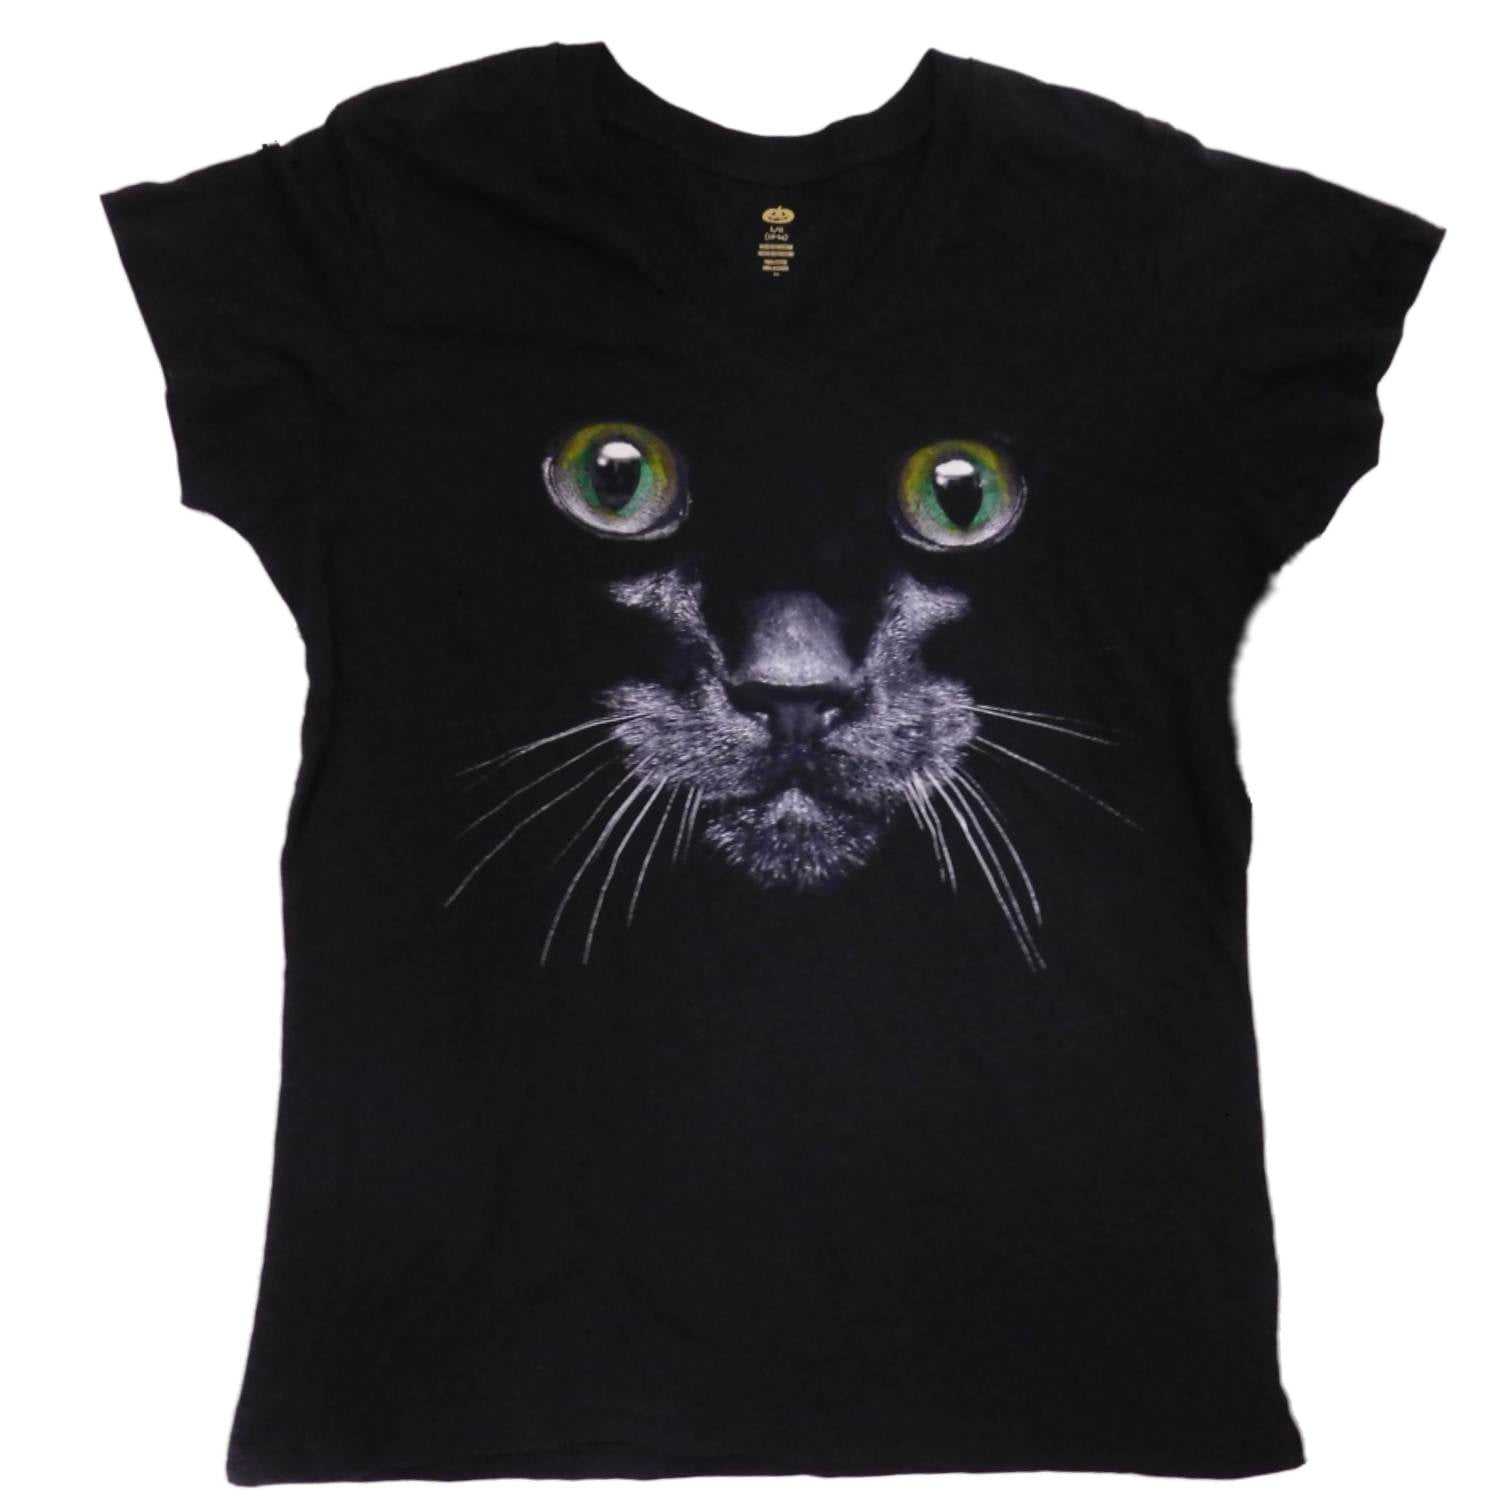 Vintage Cat T-Shirt Funny Cat Glowing Eyes Black Green Kitty Cat Big Logo Shirt